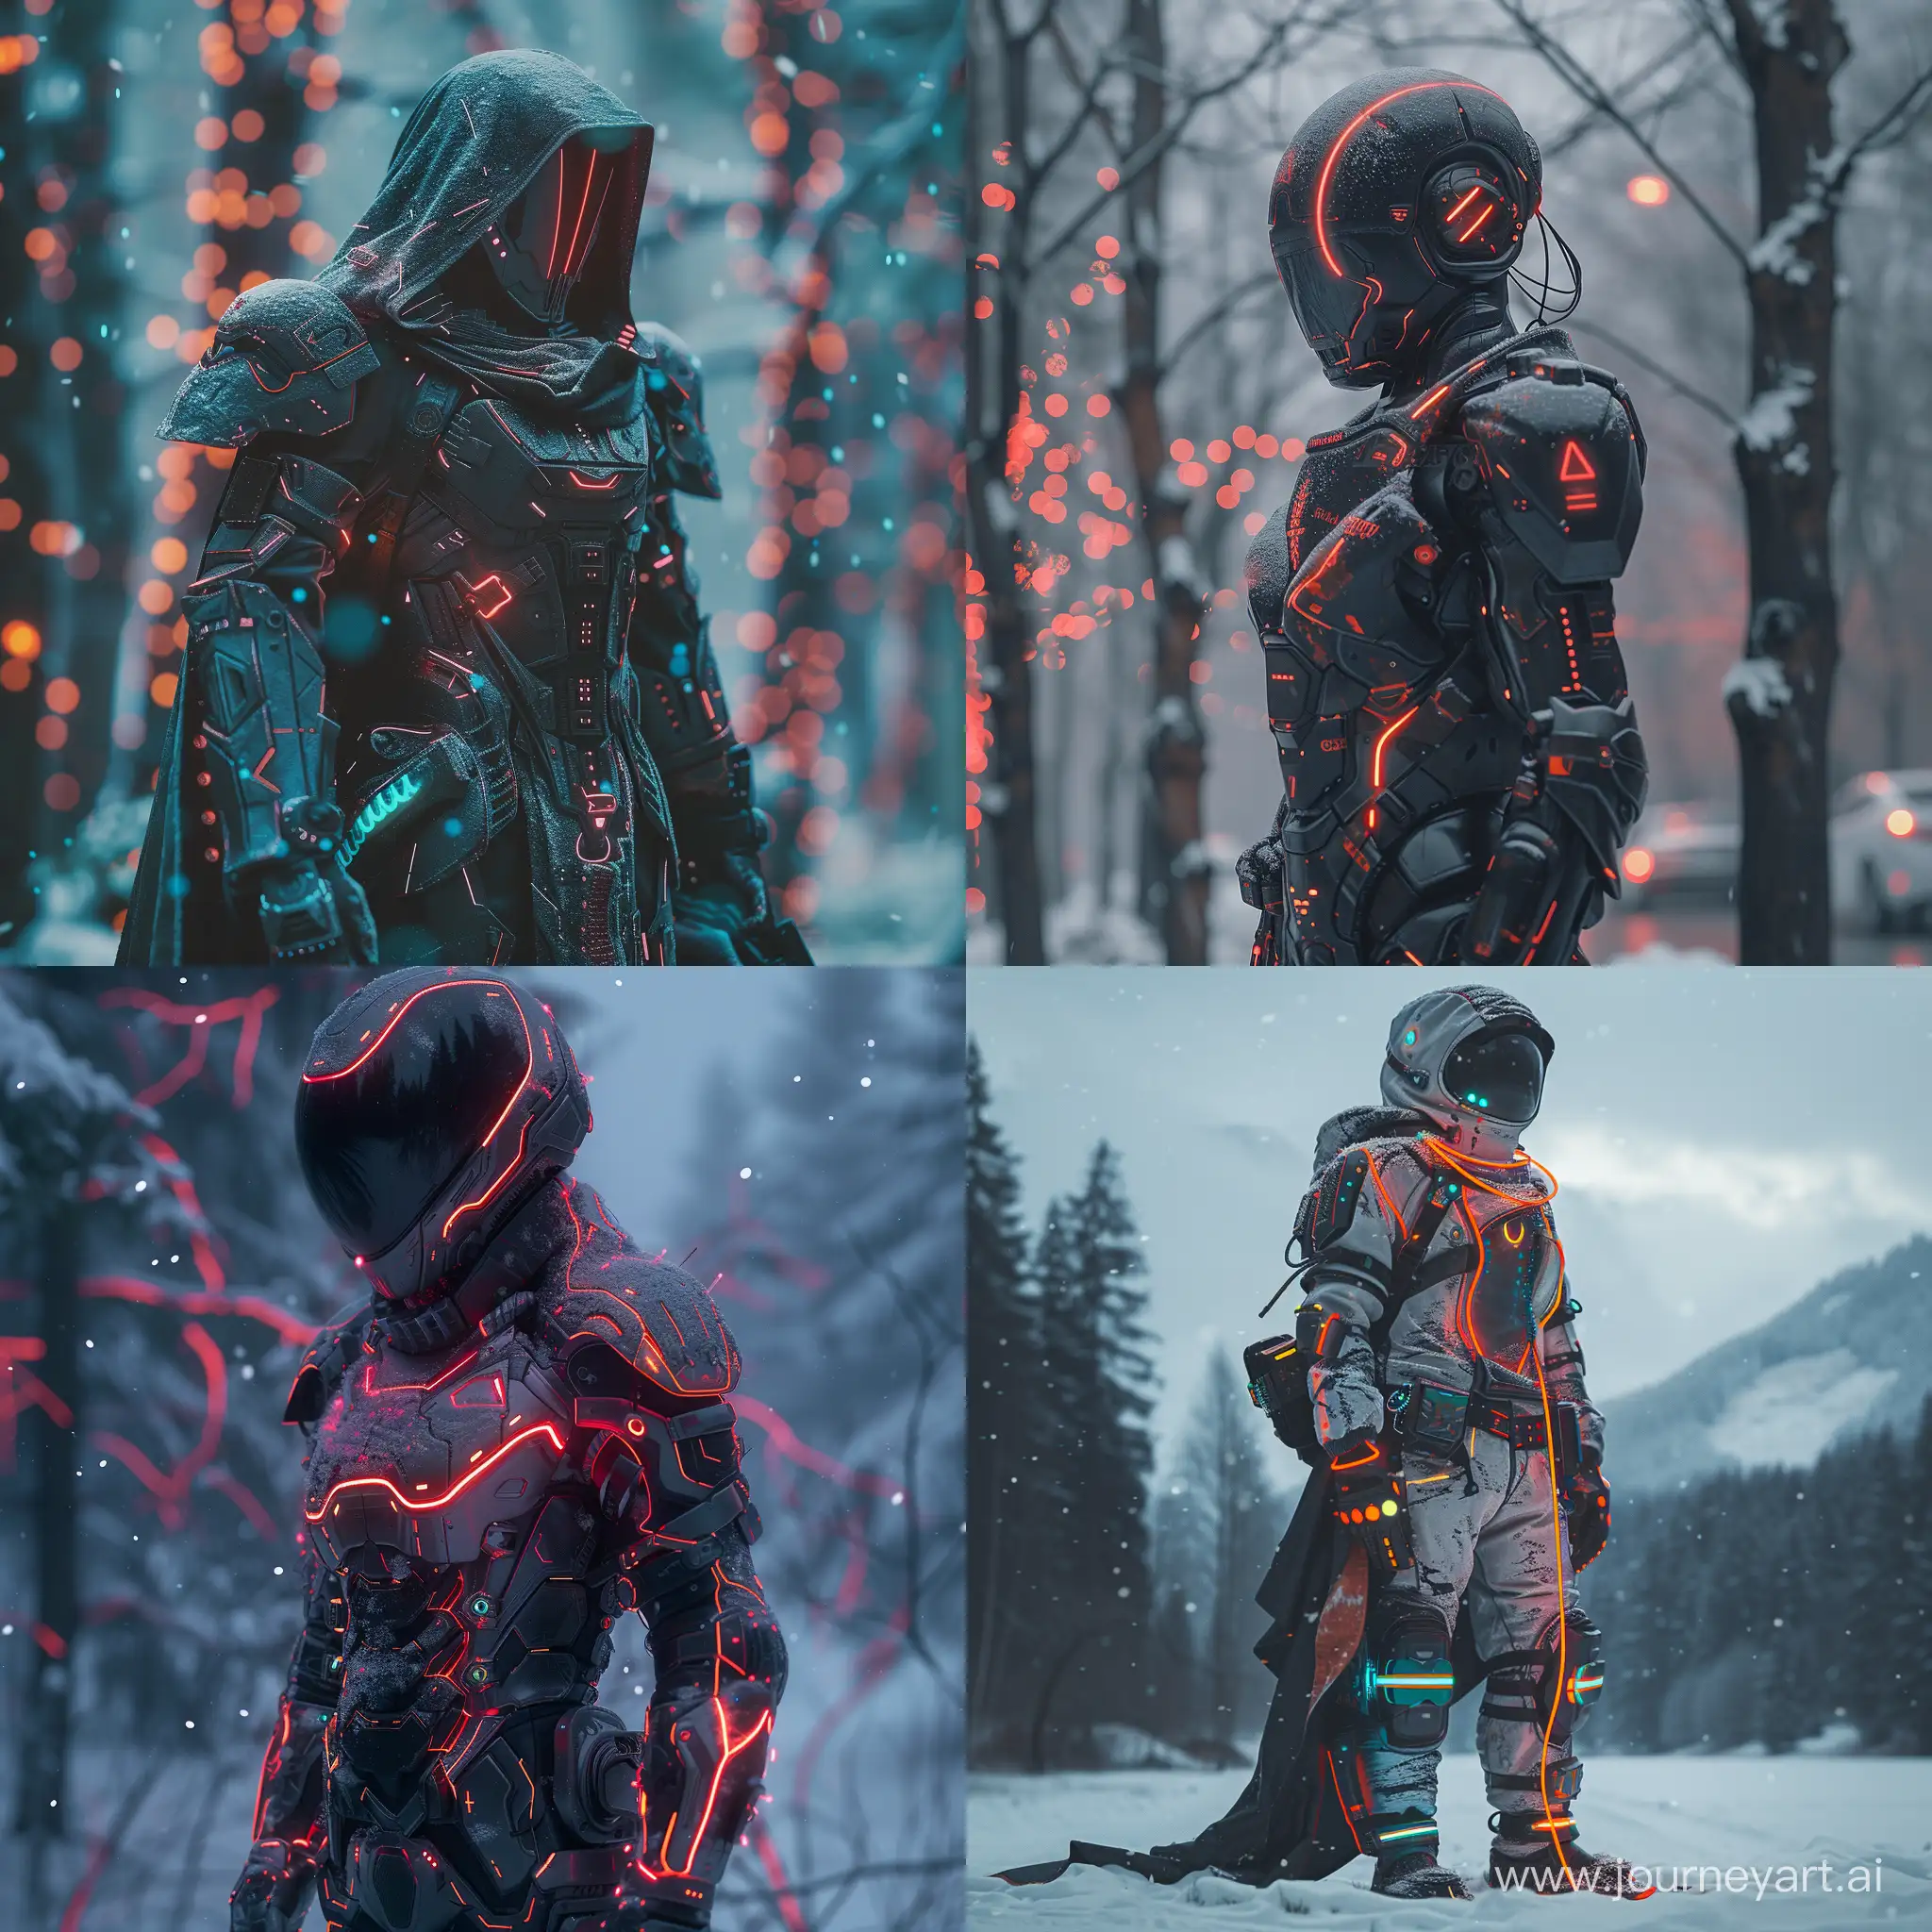 Cyberpunk-Knight-in-Winter-Neon-Accentuated-Sentinel